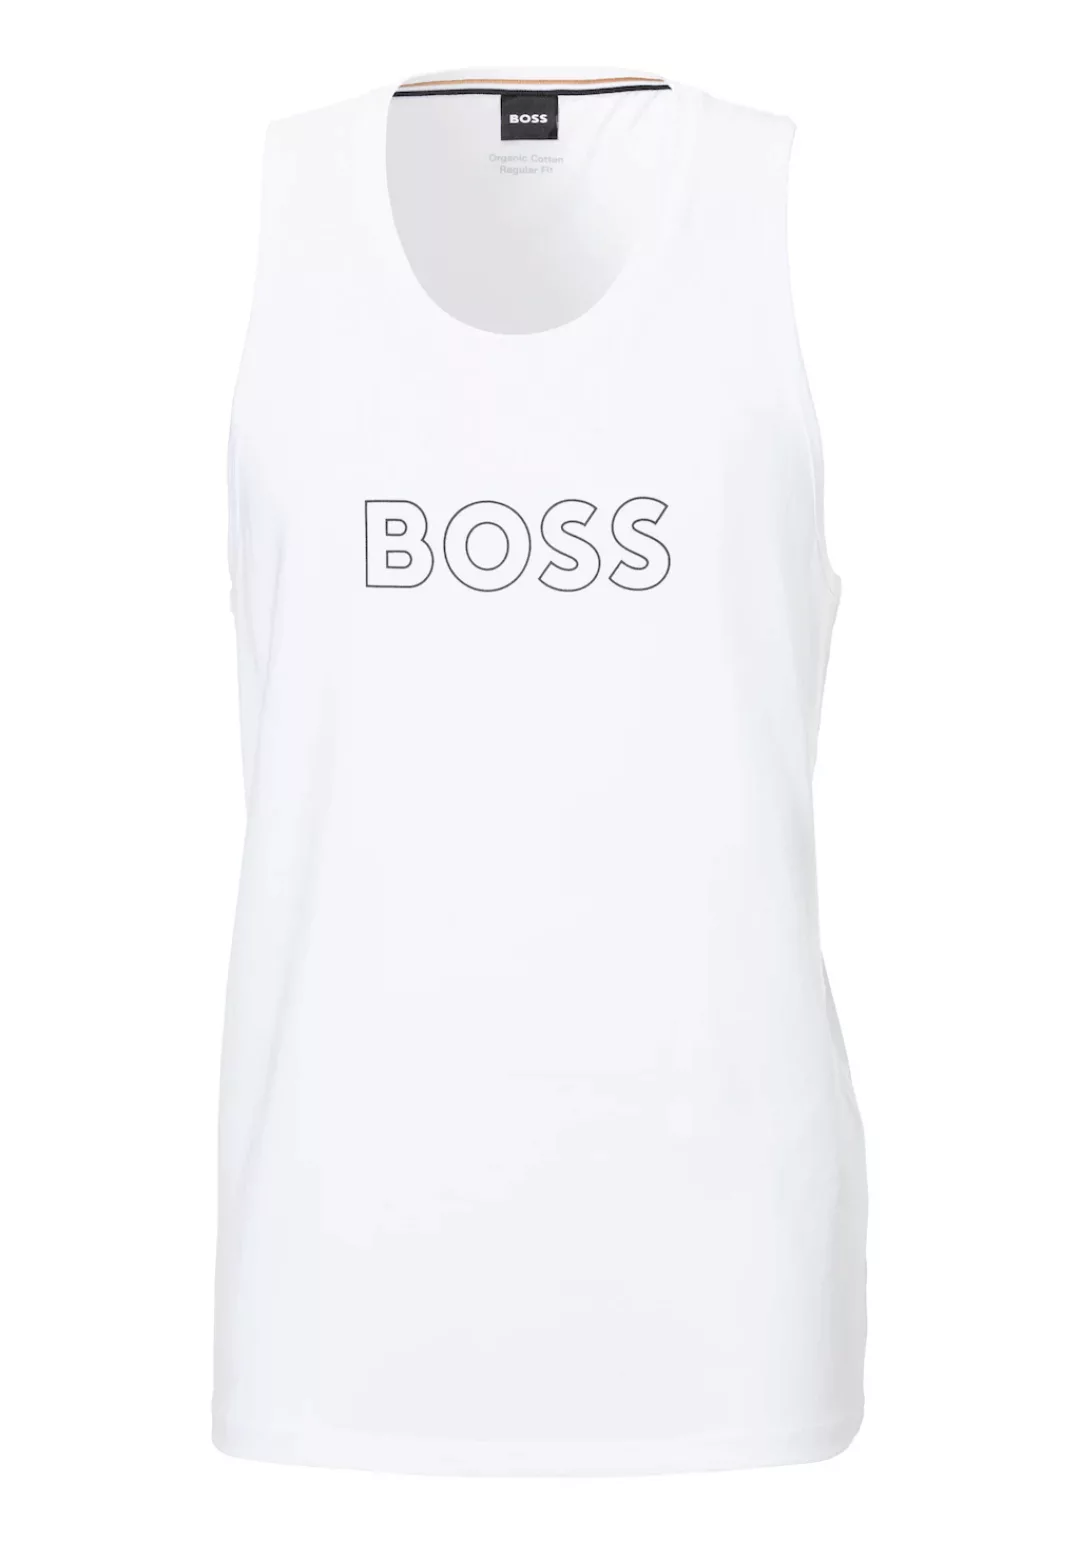 BOSS T-Shirt Beach Tank Top mit BOSS Aufdruck günstig online kaufen